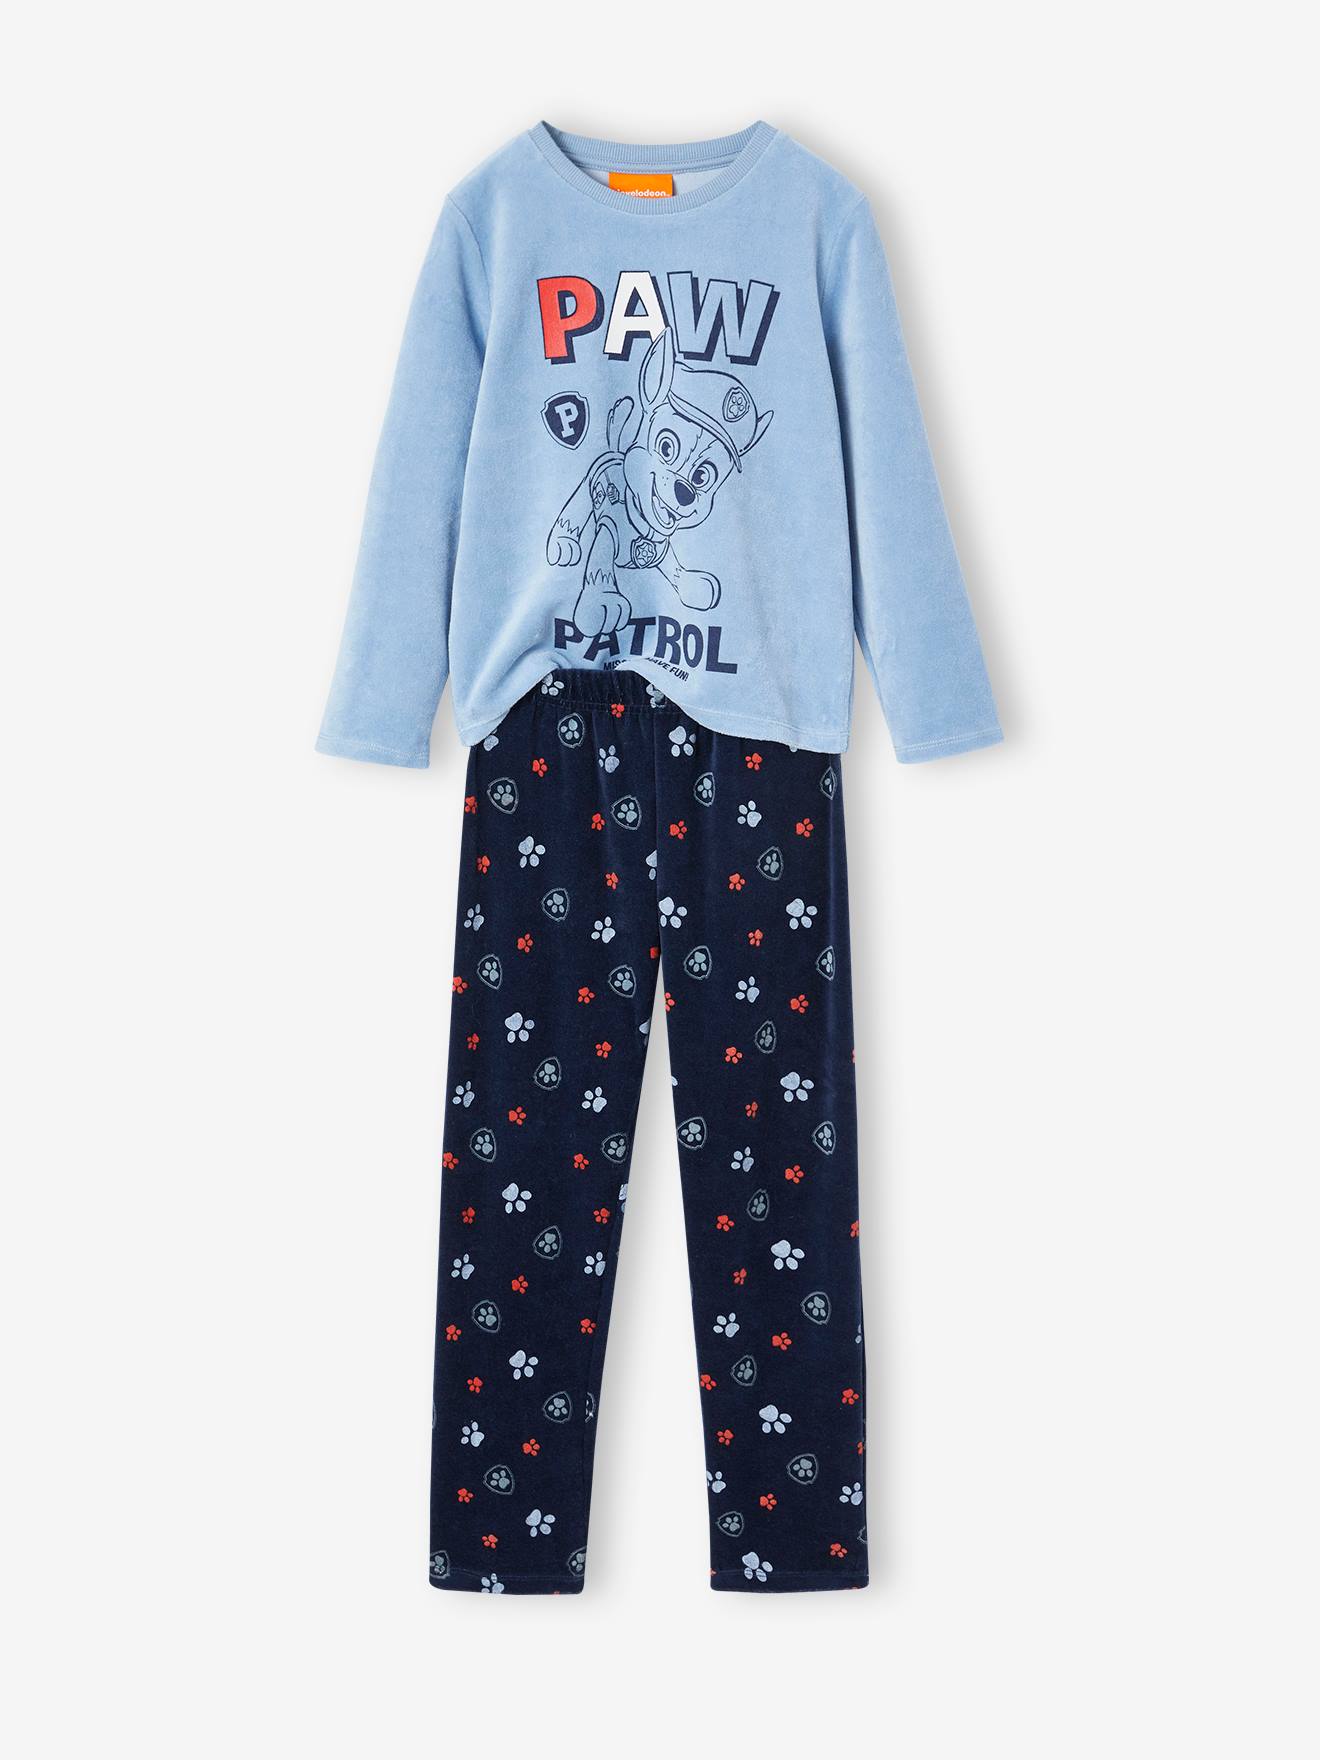 PAW PATROL Pyjama garçon 3 au 8 ans pas cher 